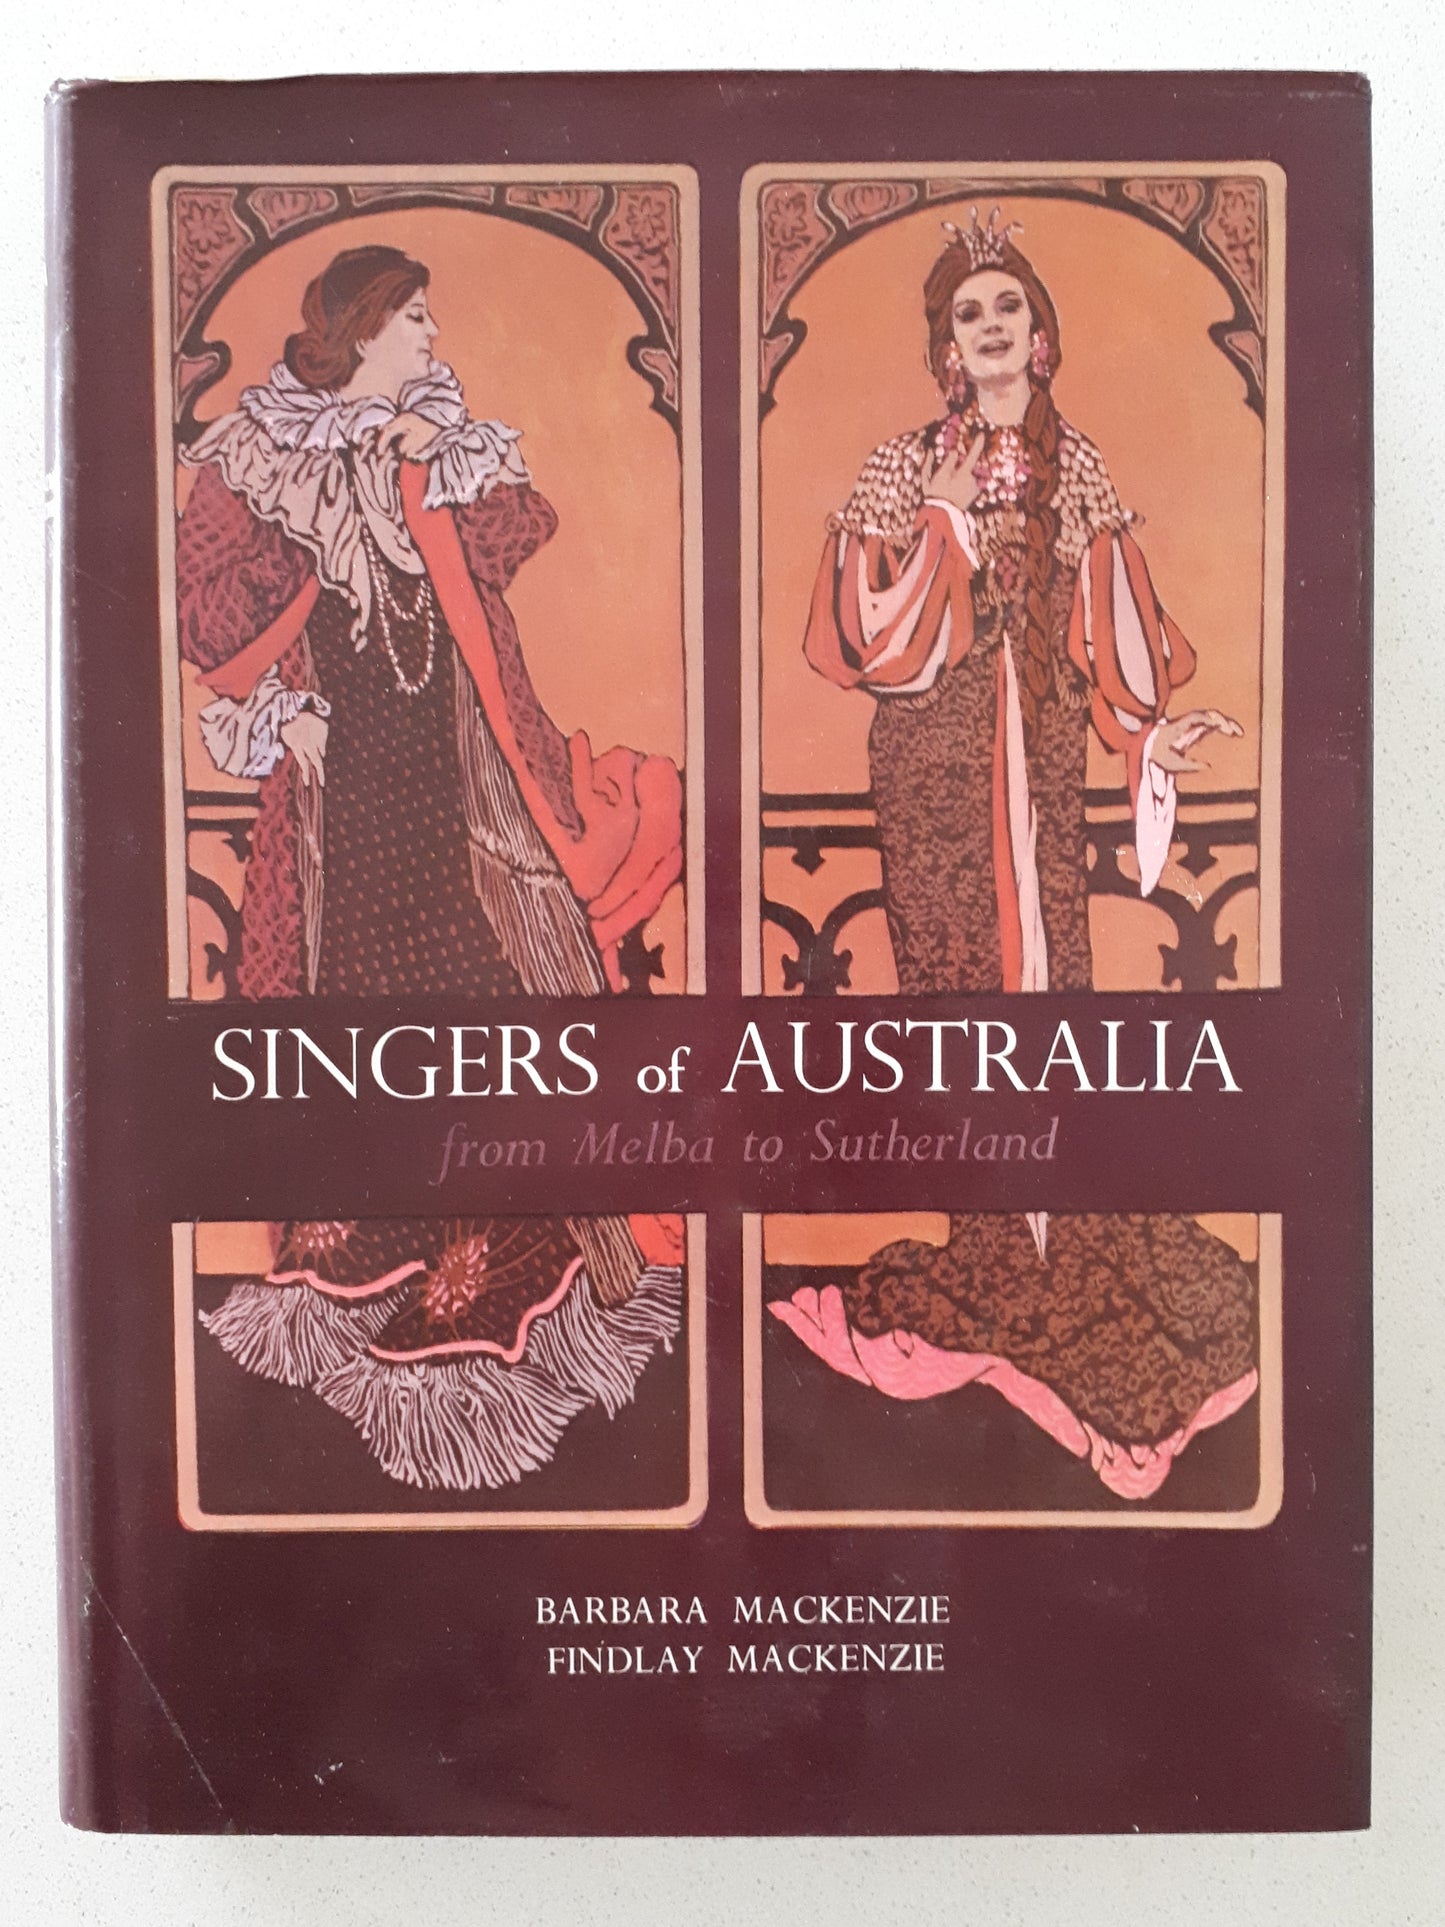 Singers of Australia  from Melba to Sutherland  by Barbara Mackenzie and Findlay Mackenzie